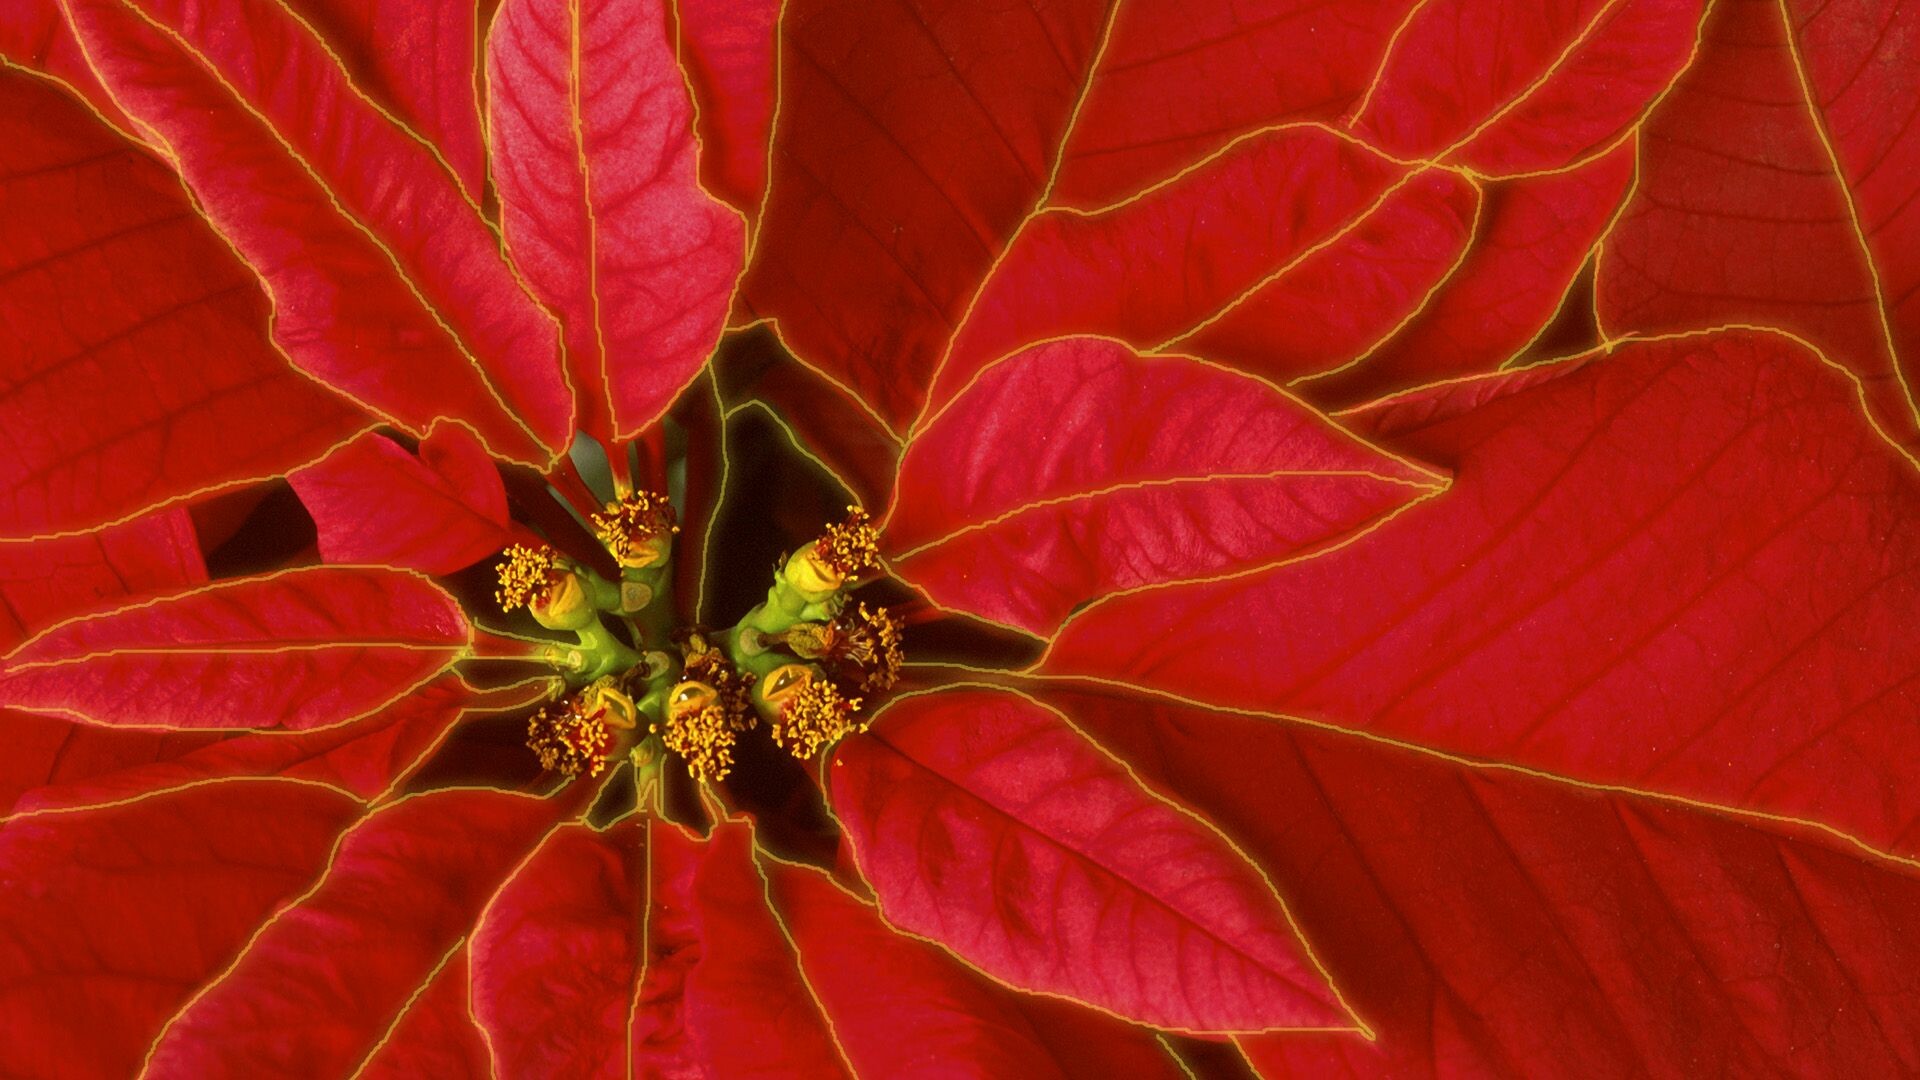 Red and green extravaganza, Poinsettia art, Festive inspiration, Christmas creativity, 1920x1080 Full HD Desktop